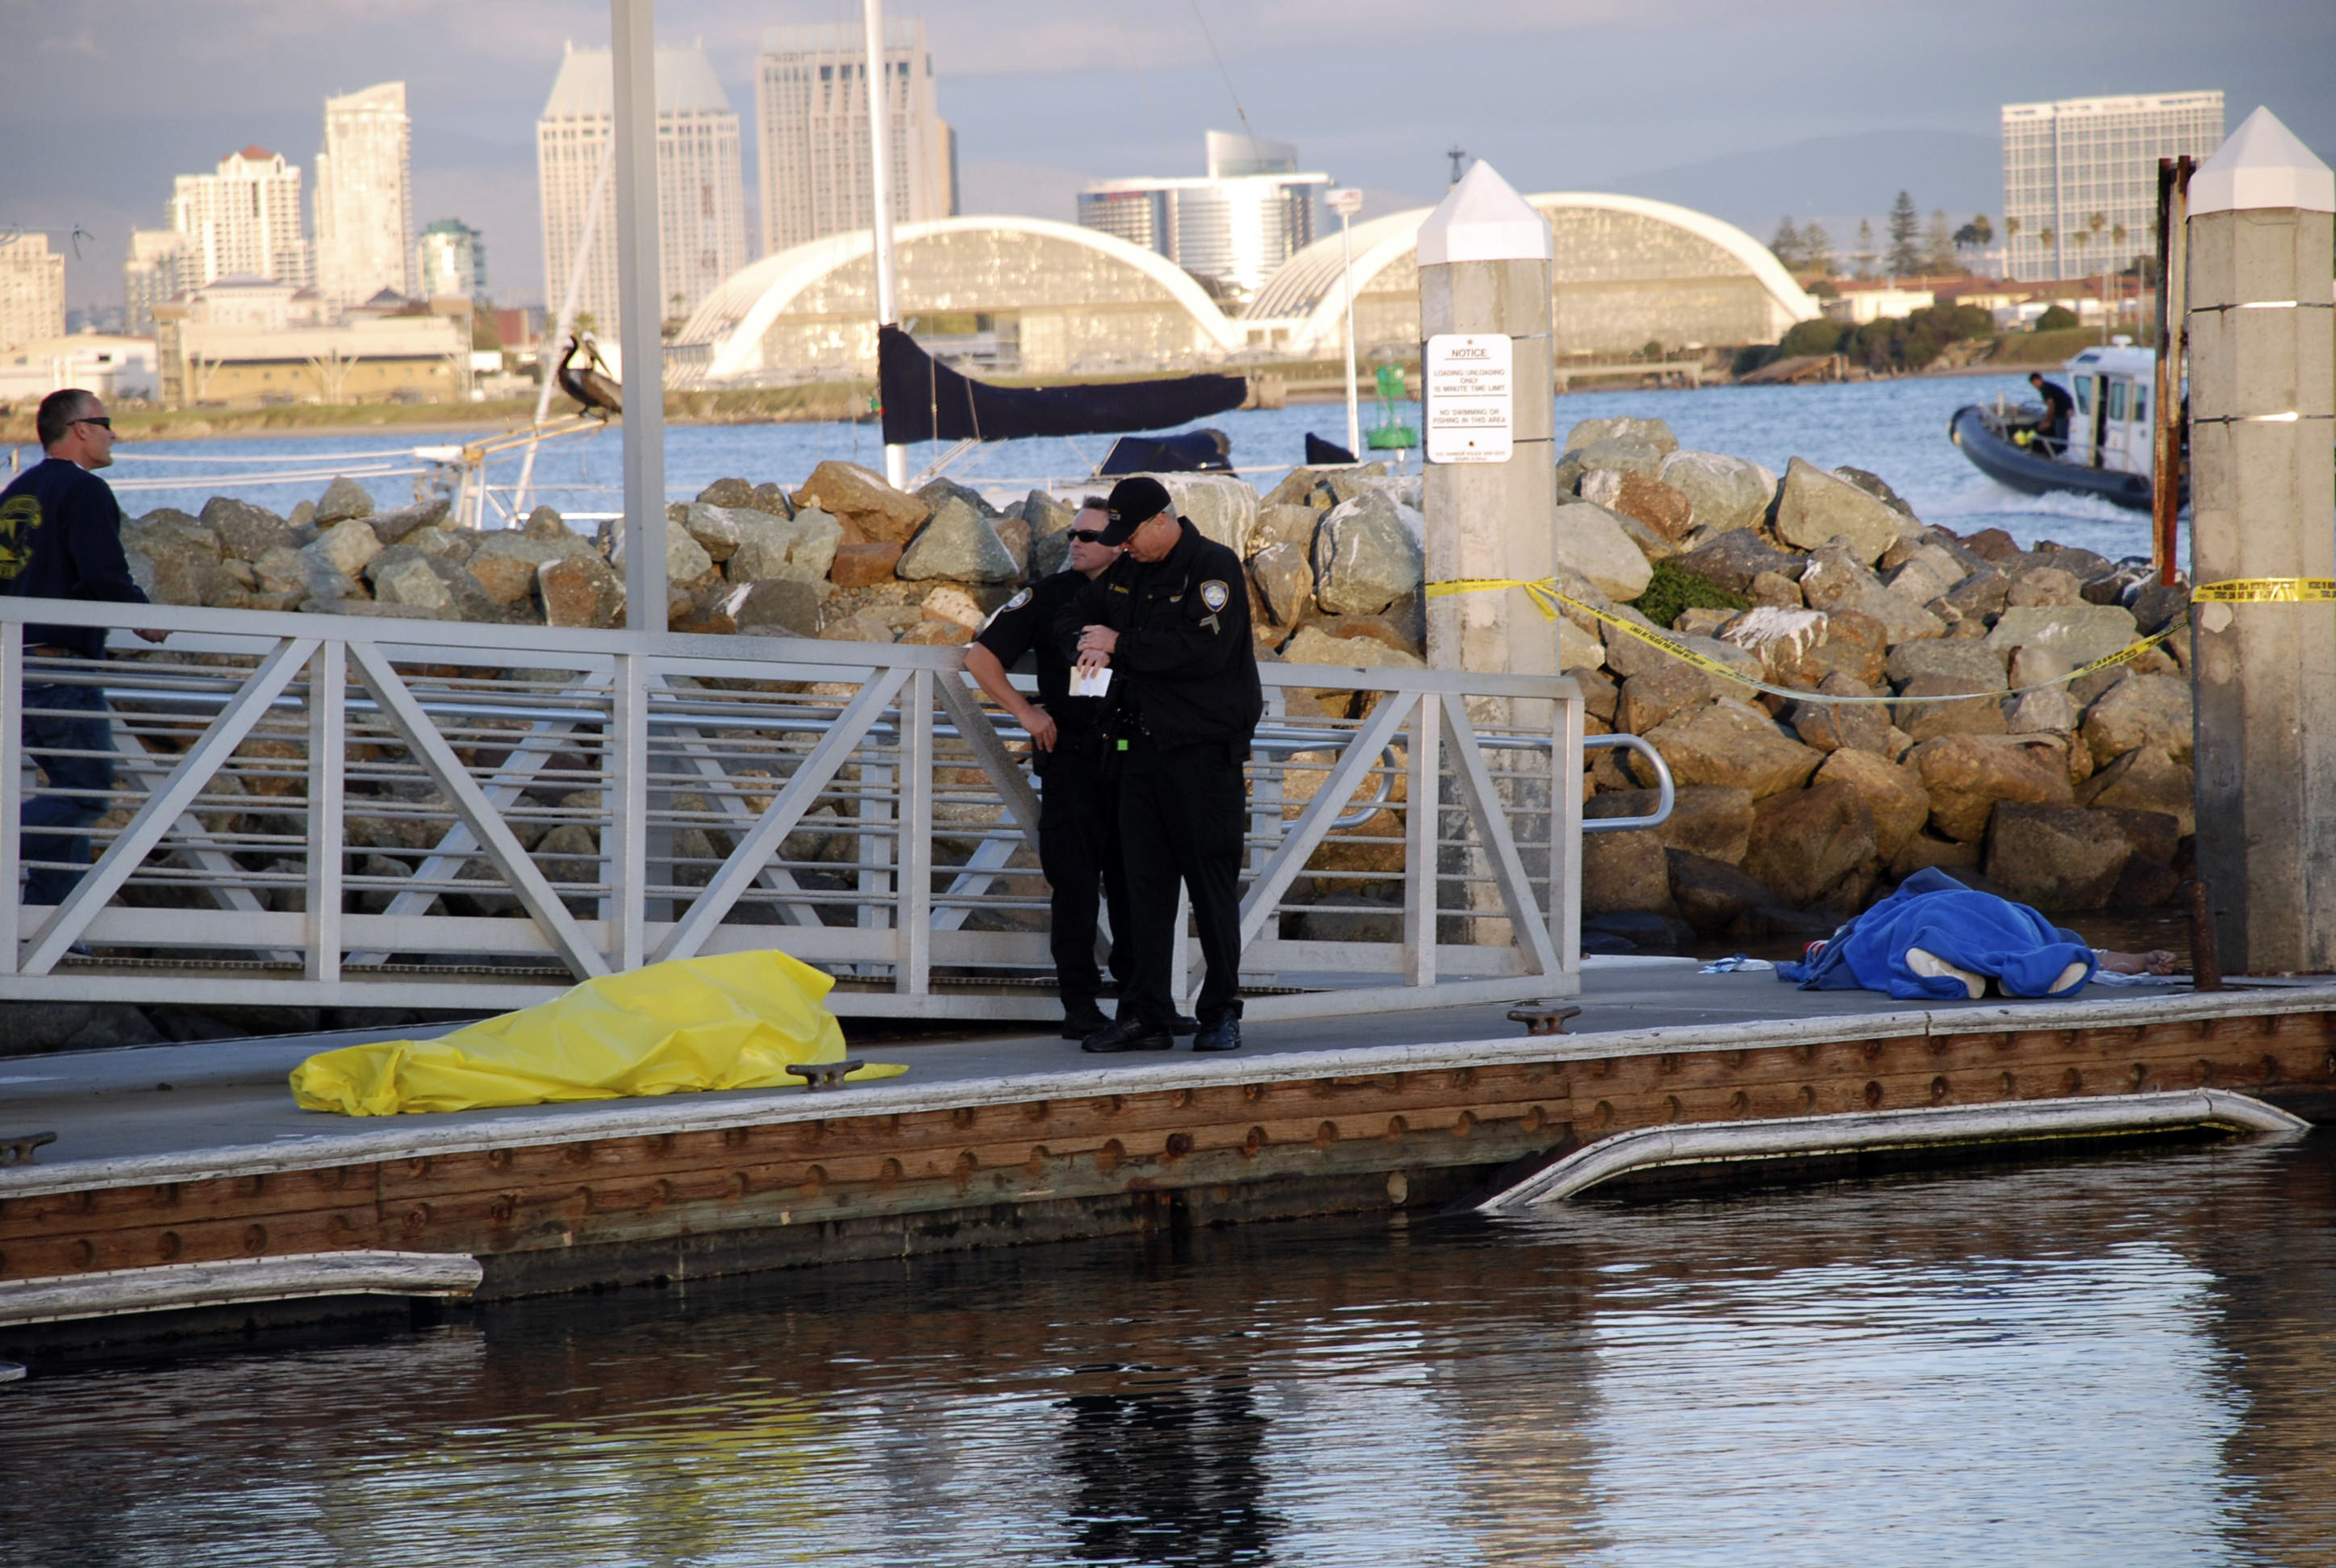 Boat capsizes off San Diego; 2 dead, 8 injured CBS News